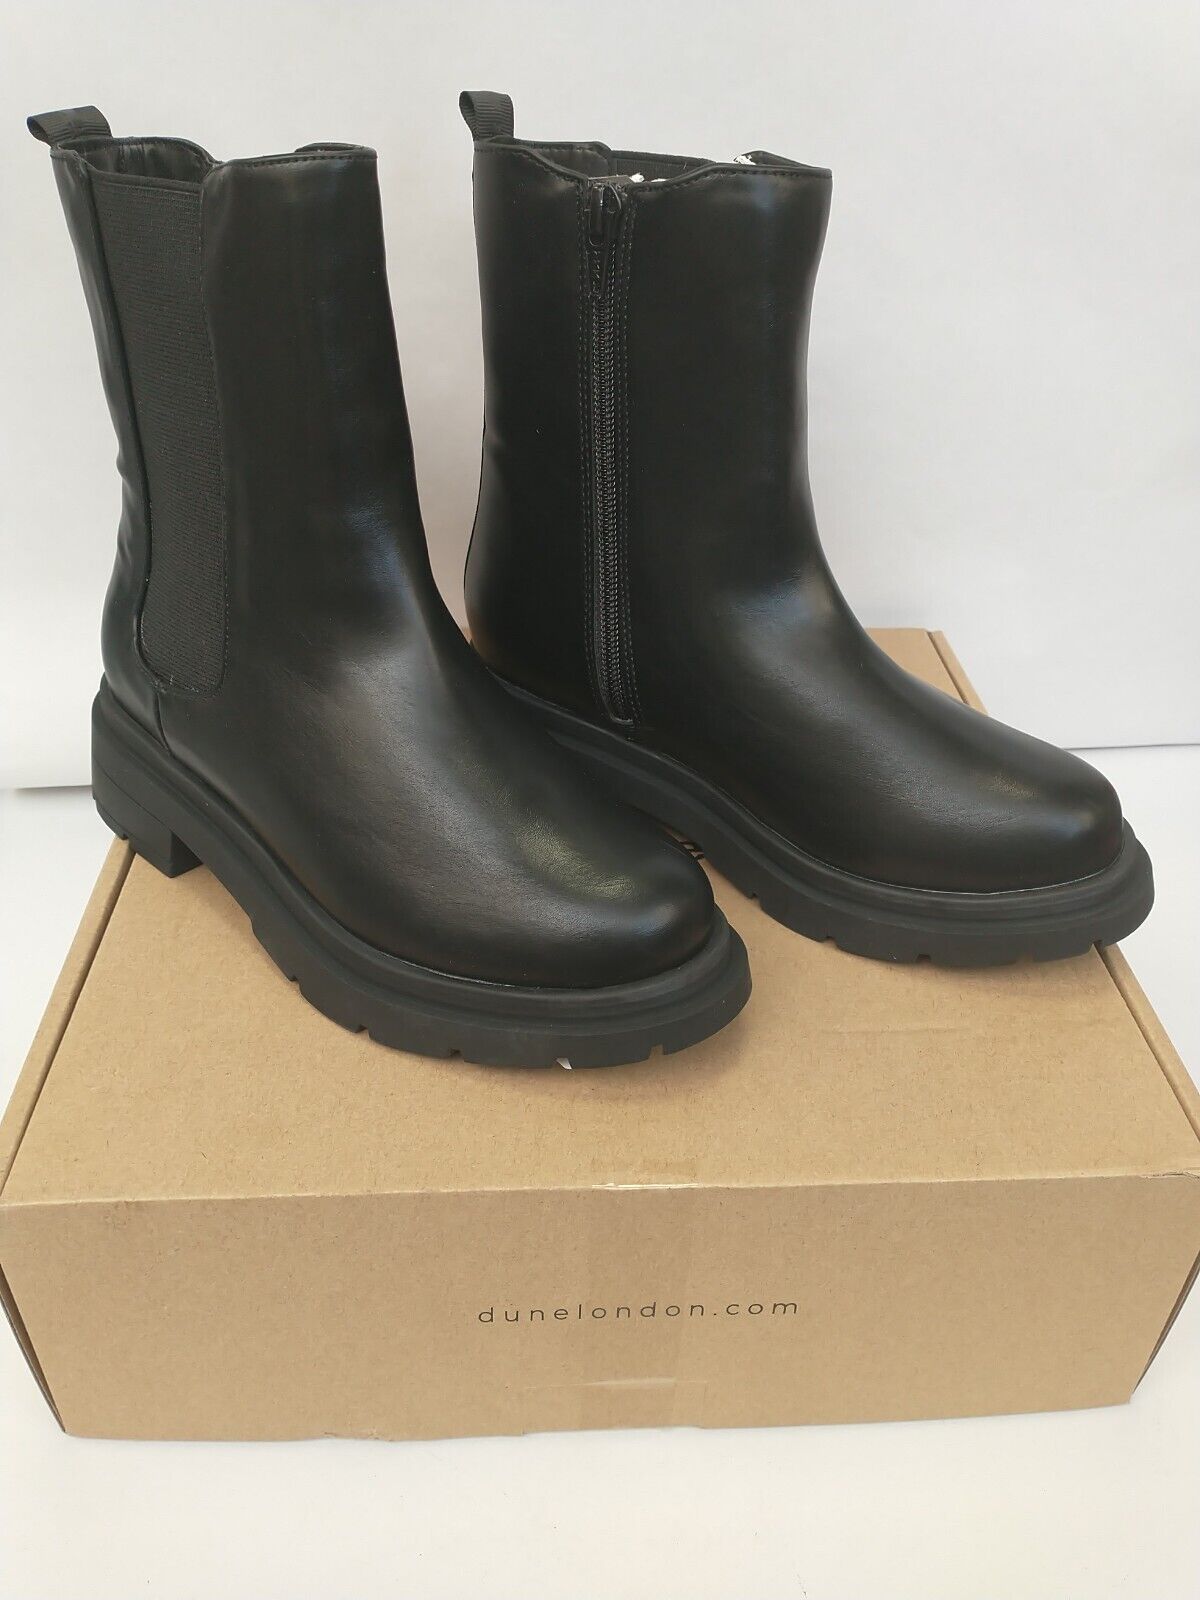 Dune London Women's Leather Boots. UK 1 Black****RefVS1